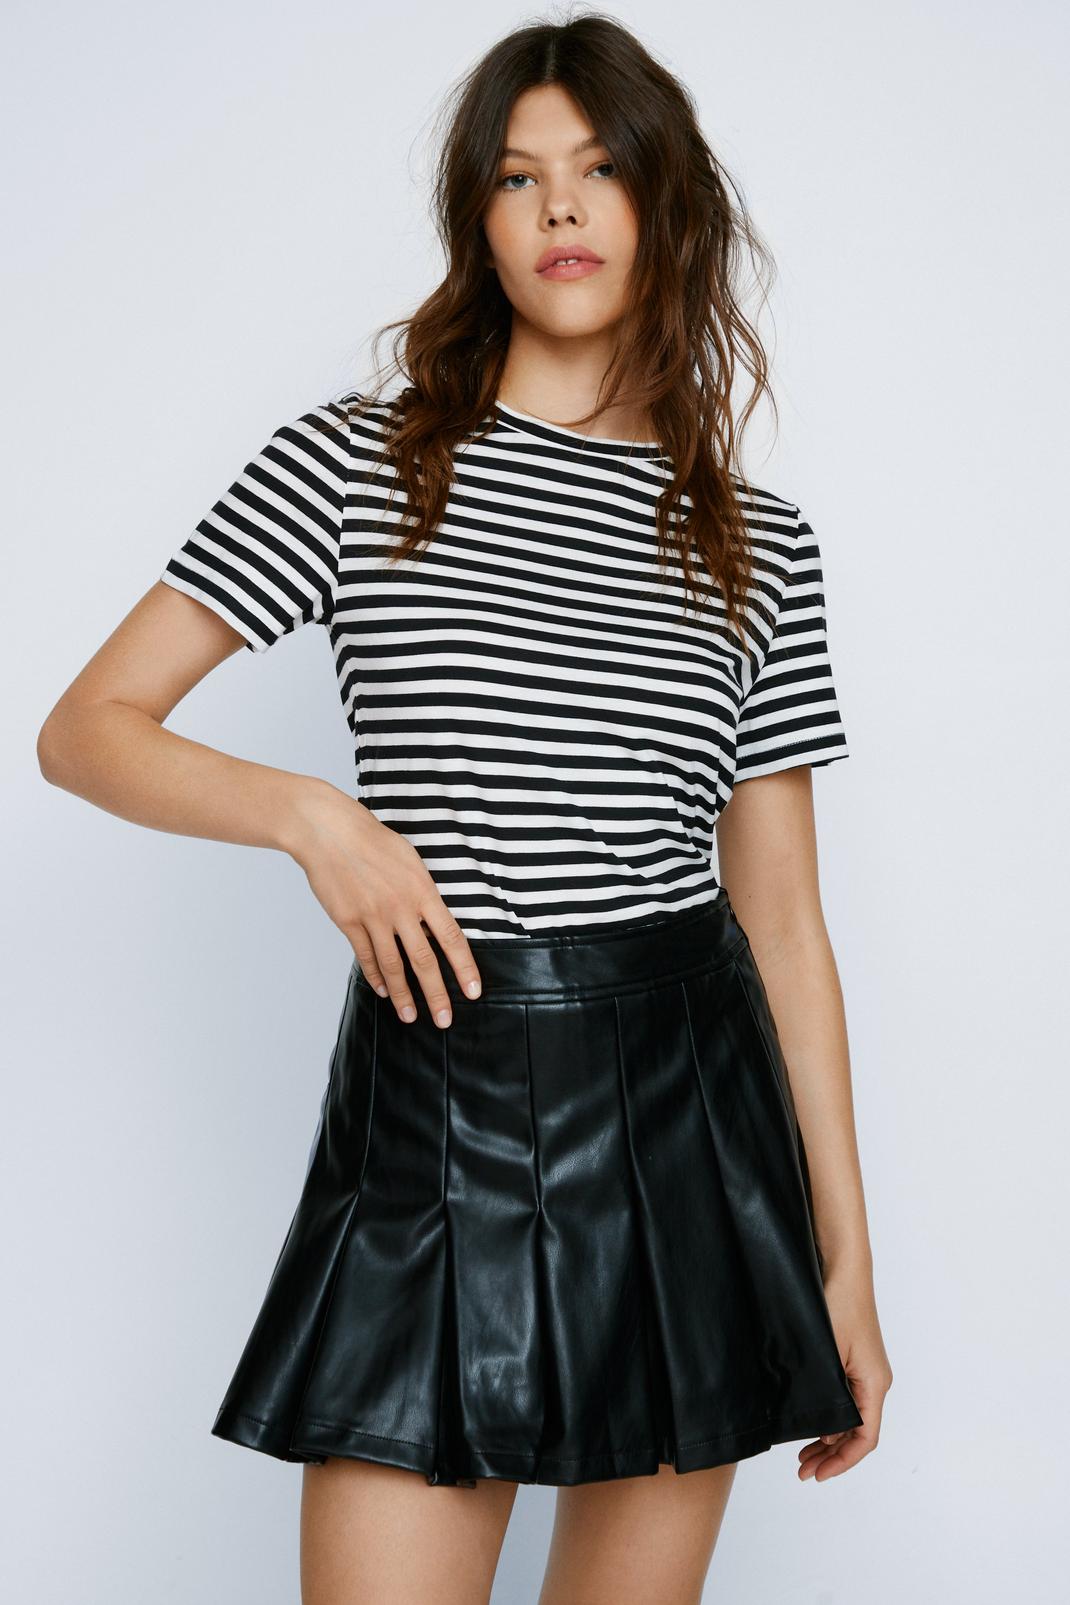 How to Make a High Waisted Pleather Mini Skirt 